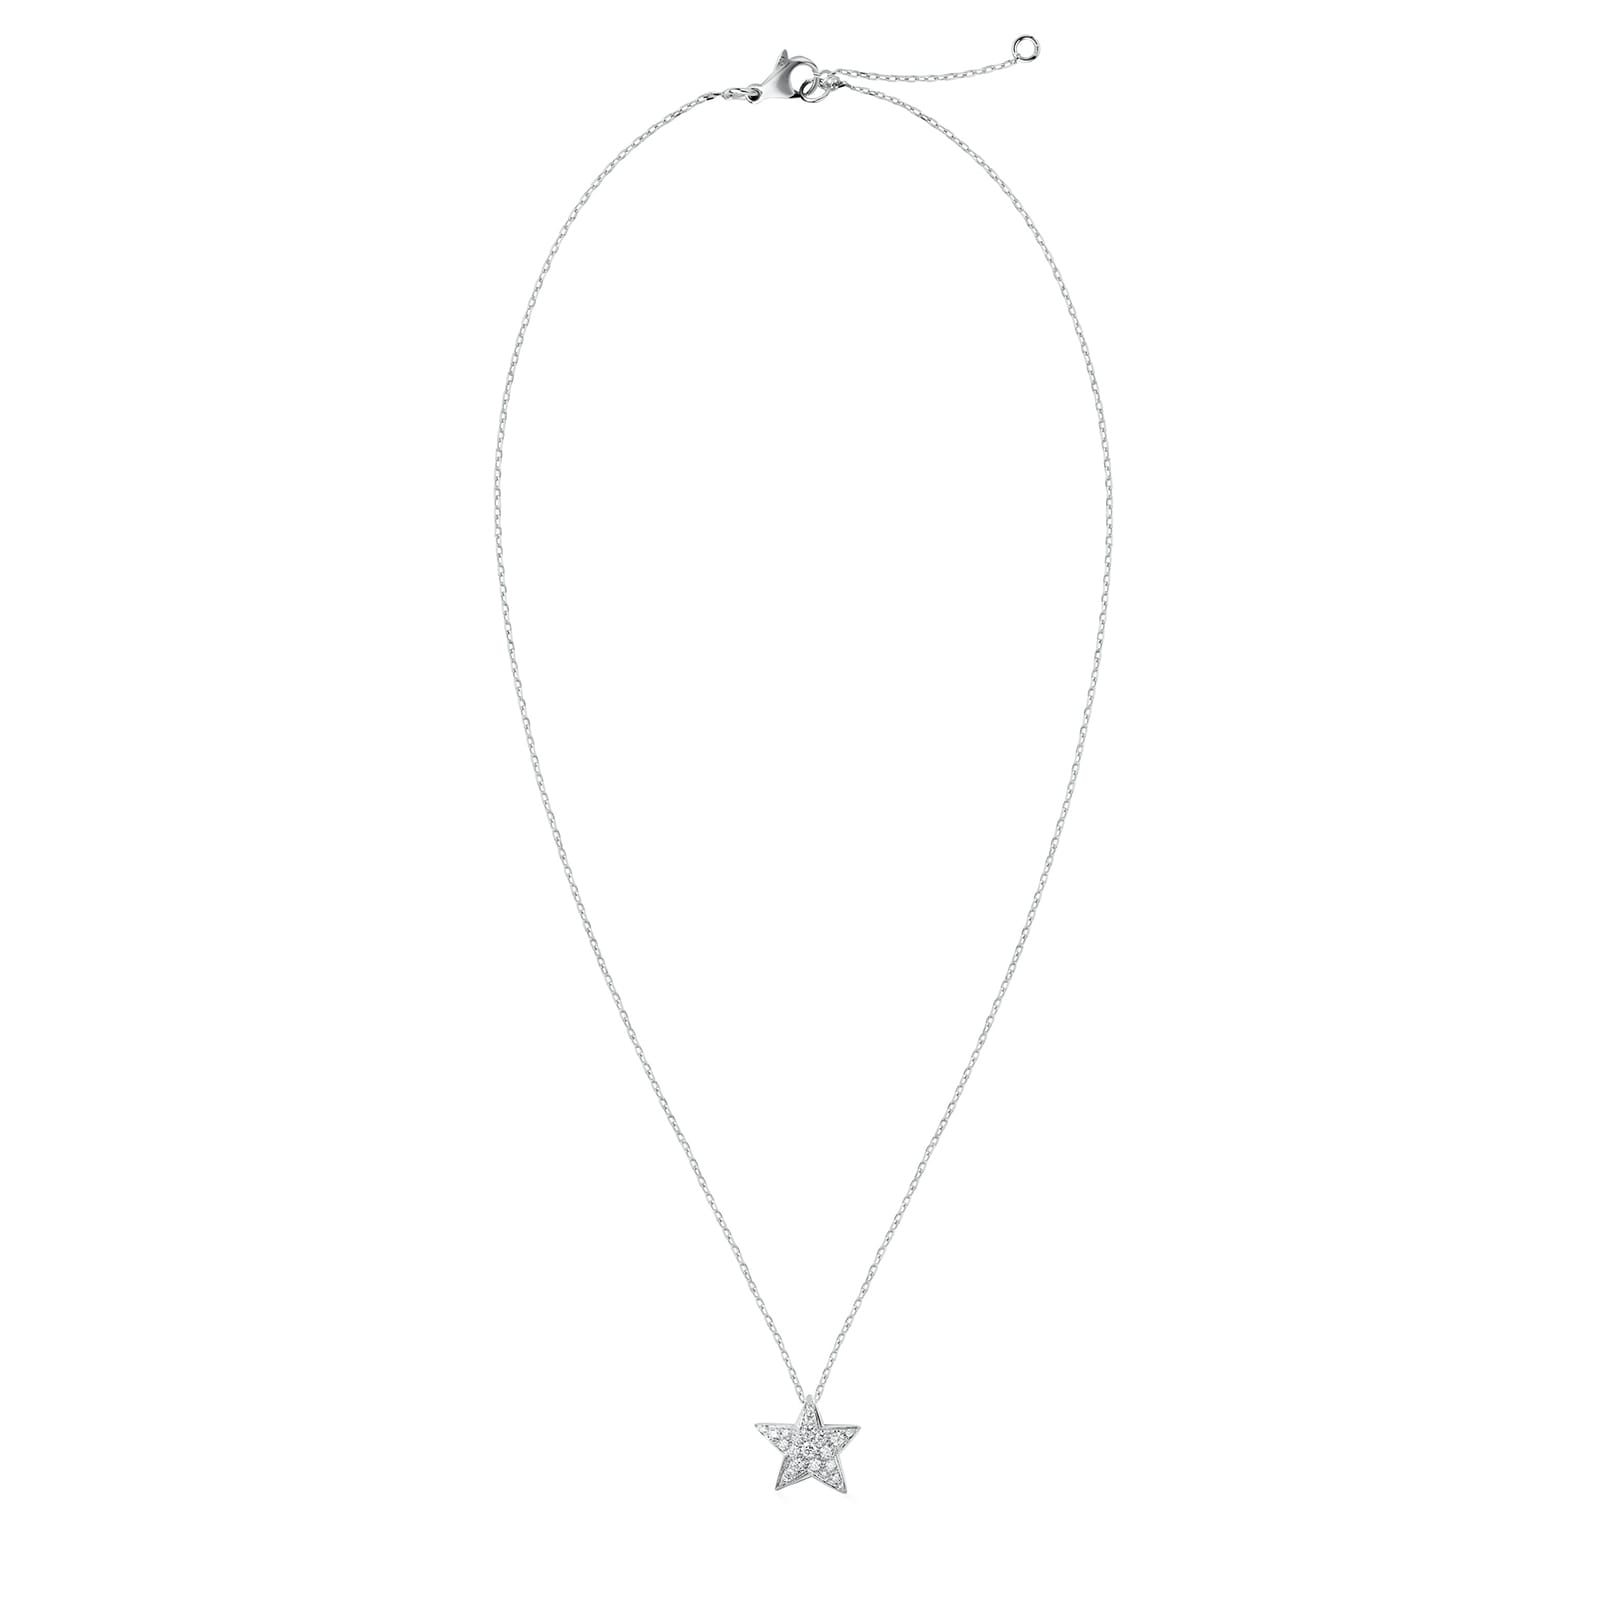 Chanel Comète Diamonds Necklace 18k White Gold High Jewelry